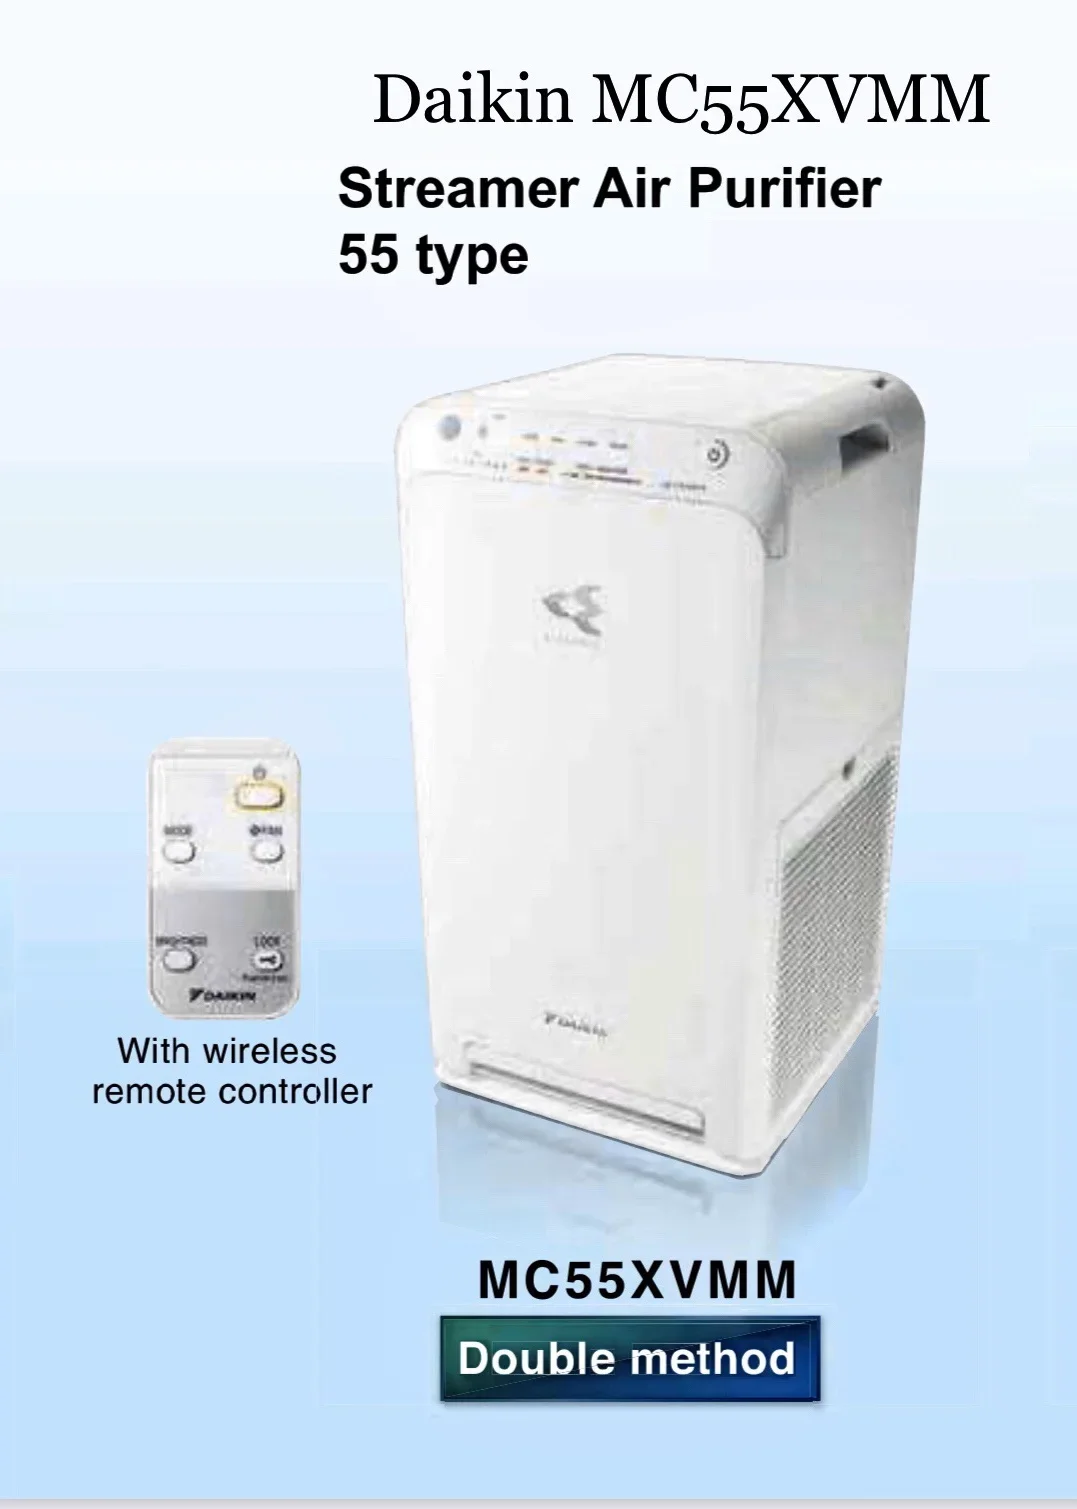 Daikin MC55XVMM Streamer Air Purifier